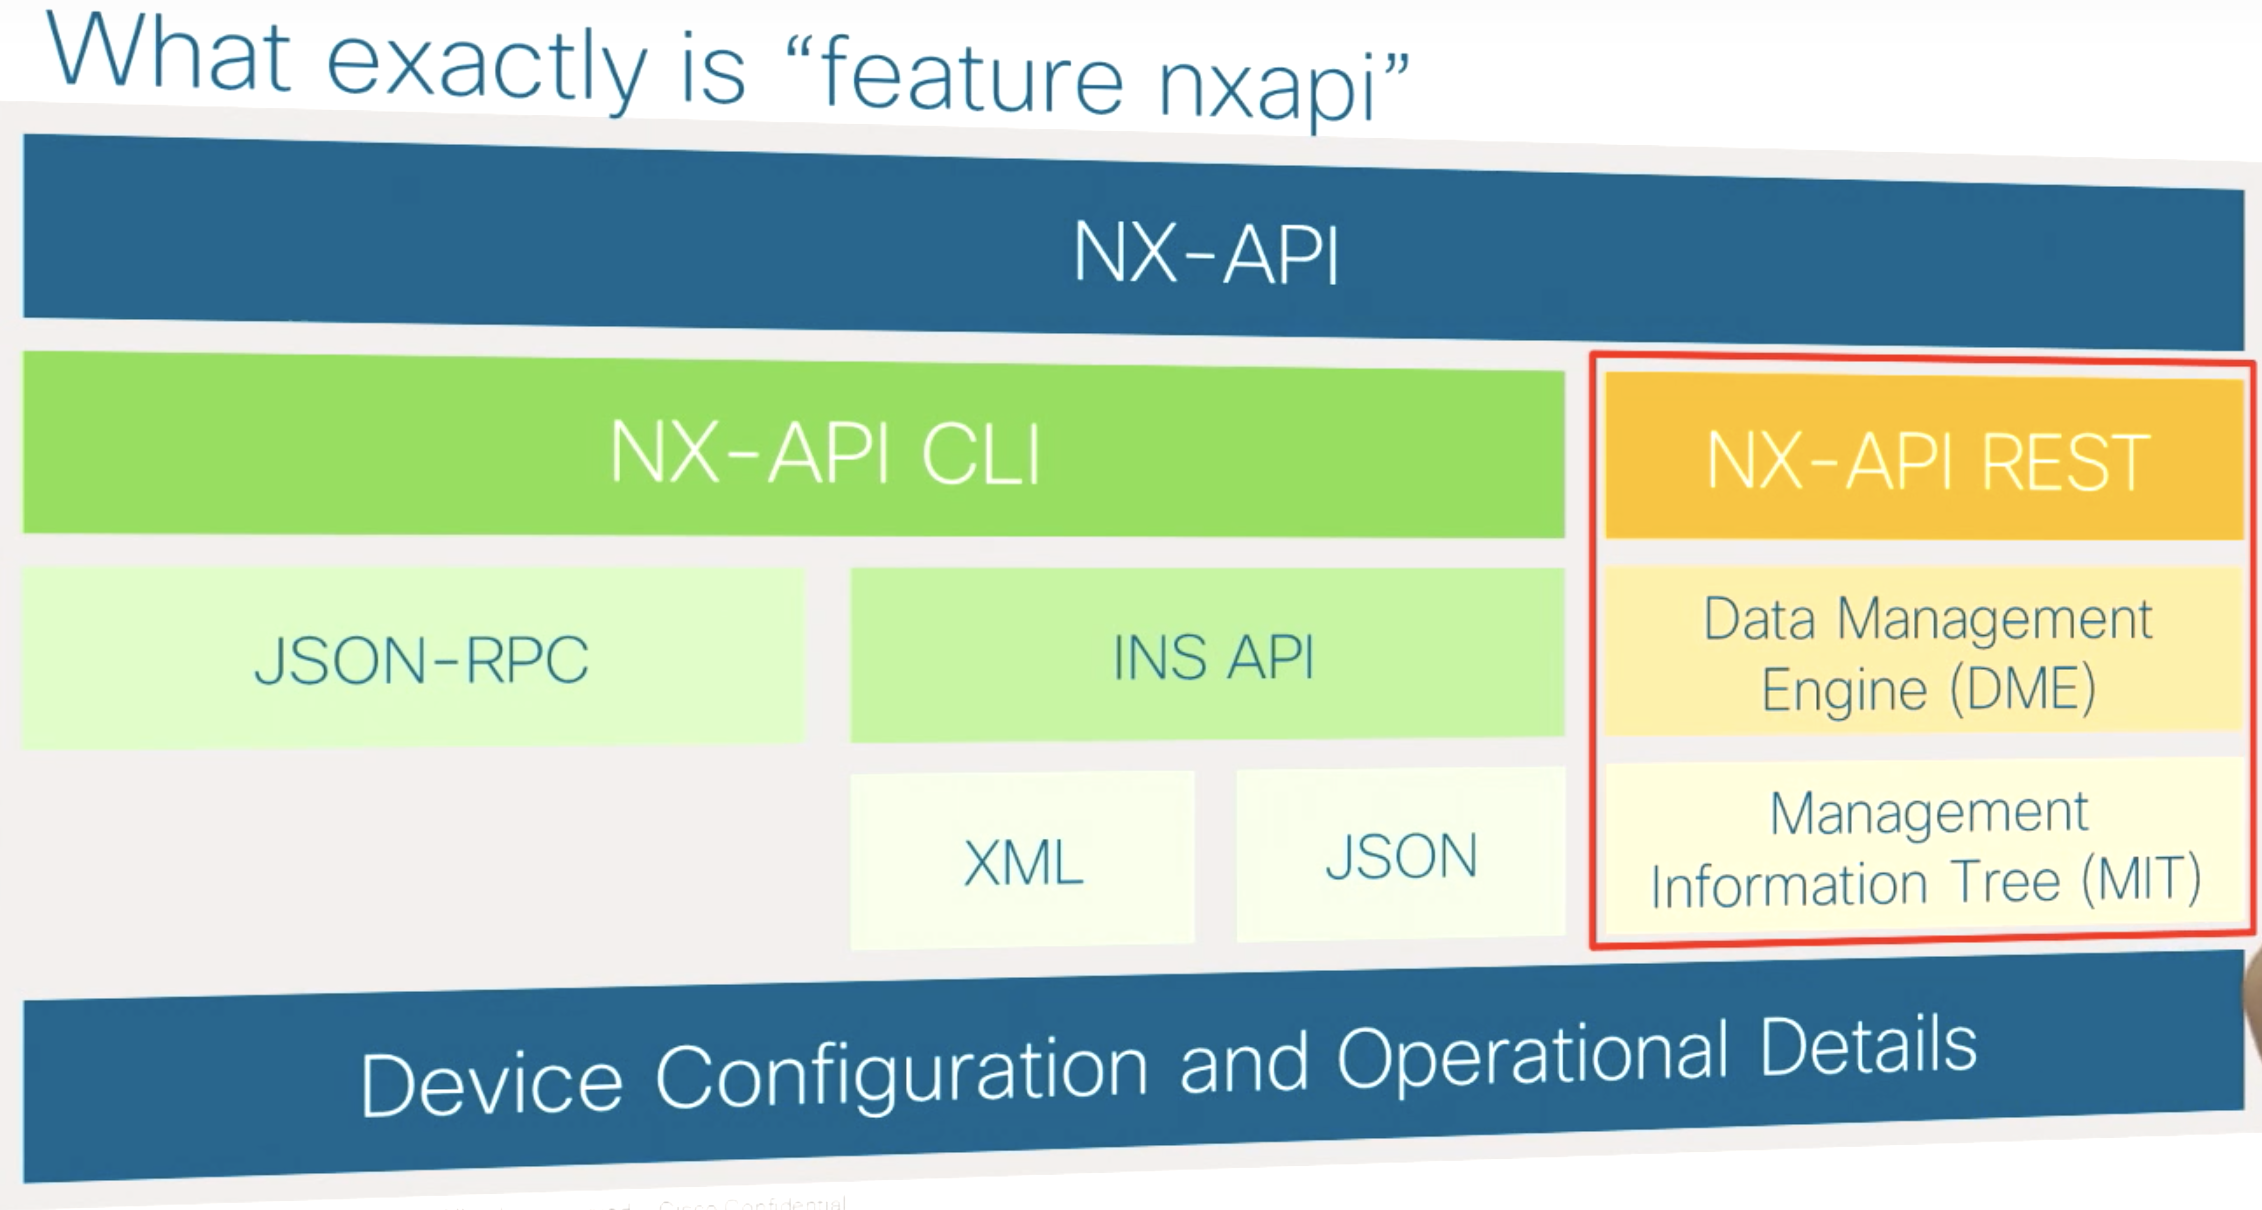 NX-API-REST.png